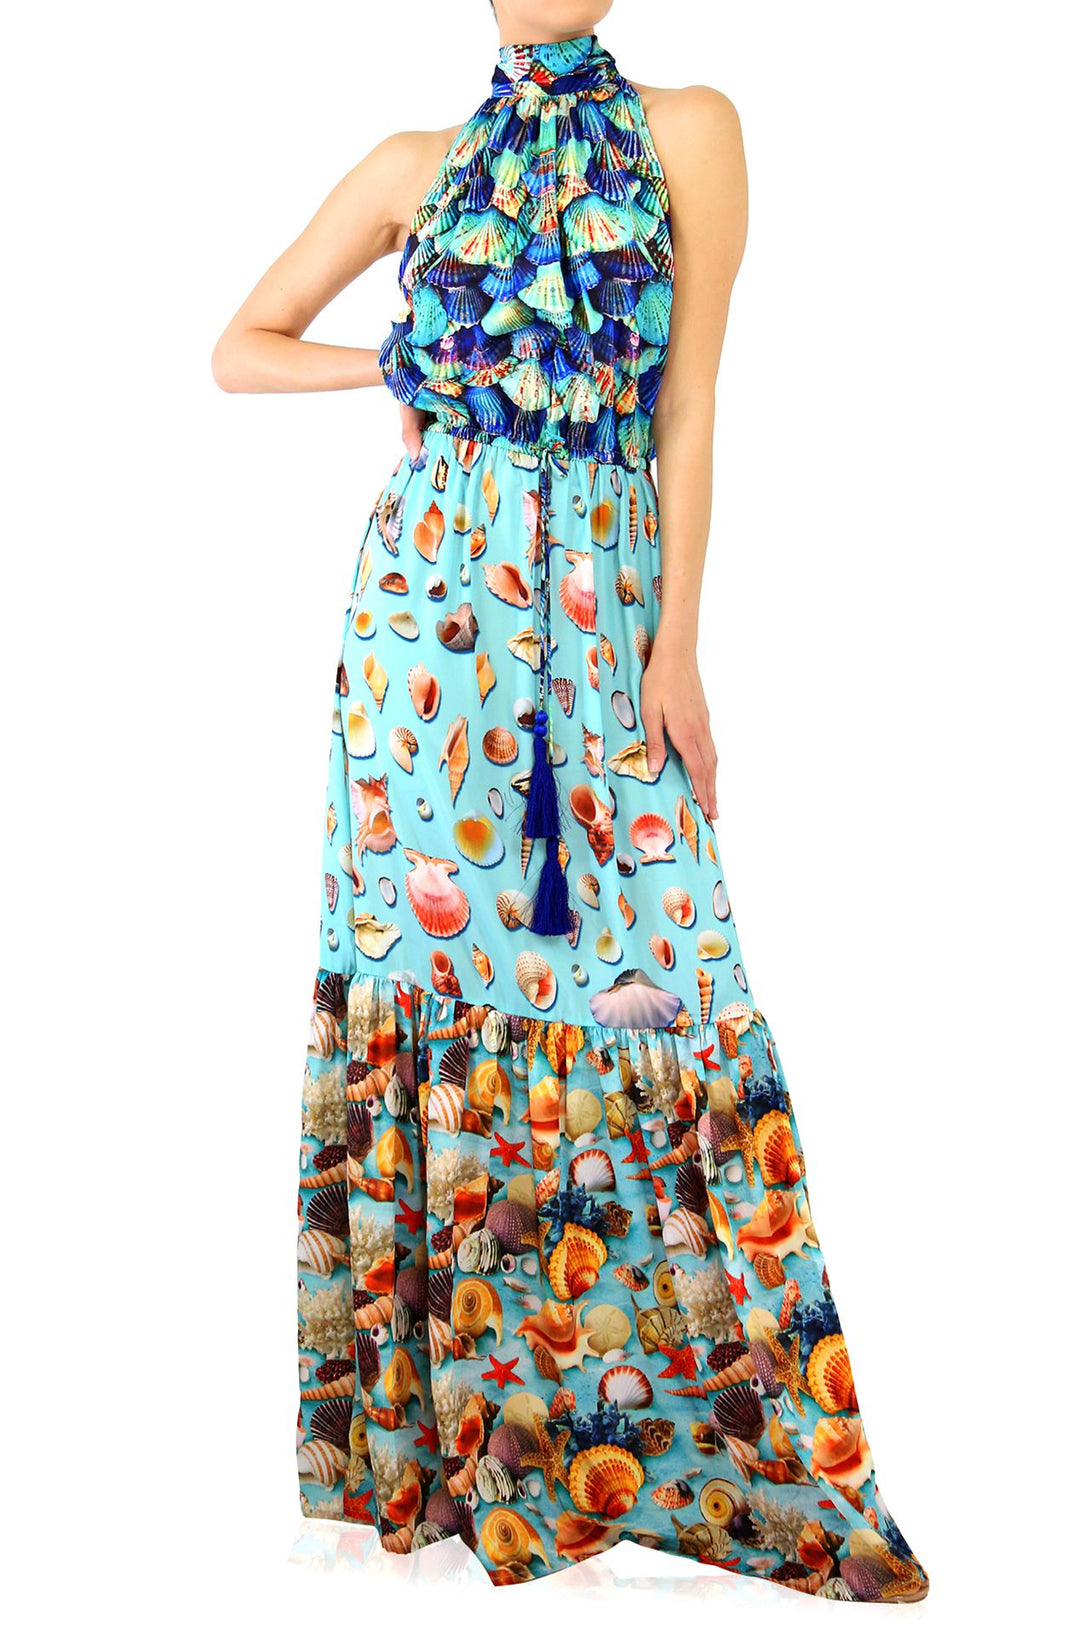 "blue dresses for women" "beach maxi dress" "Shahida Parides" "floor length dress"